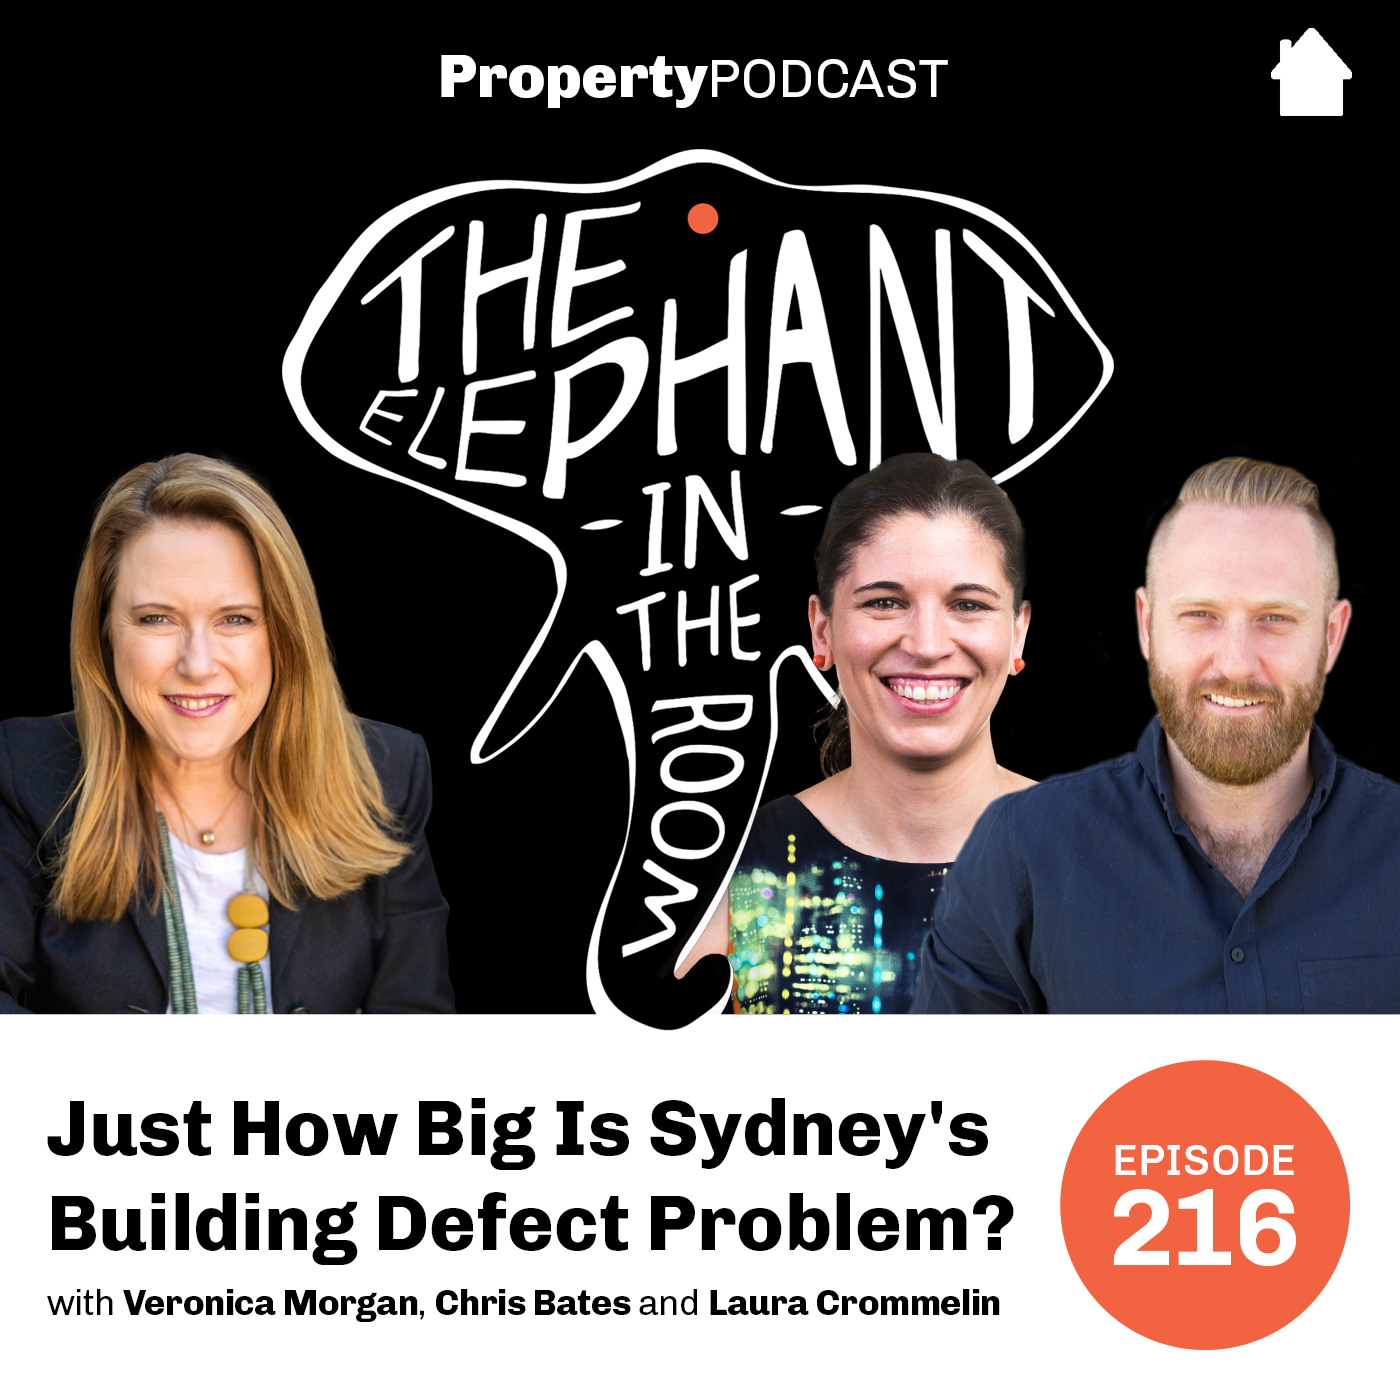 Laura Crommelin | Just How Big Is Sydney's Building Defect Problem